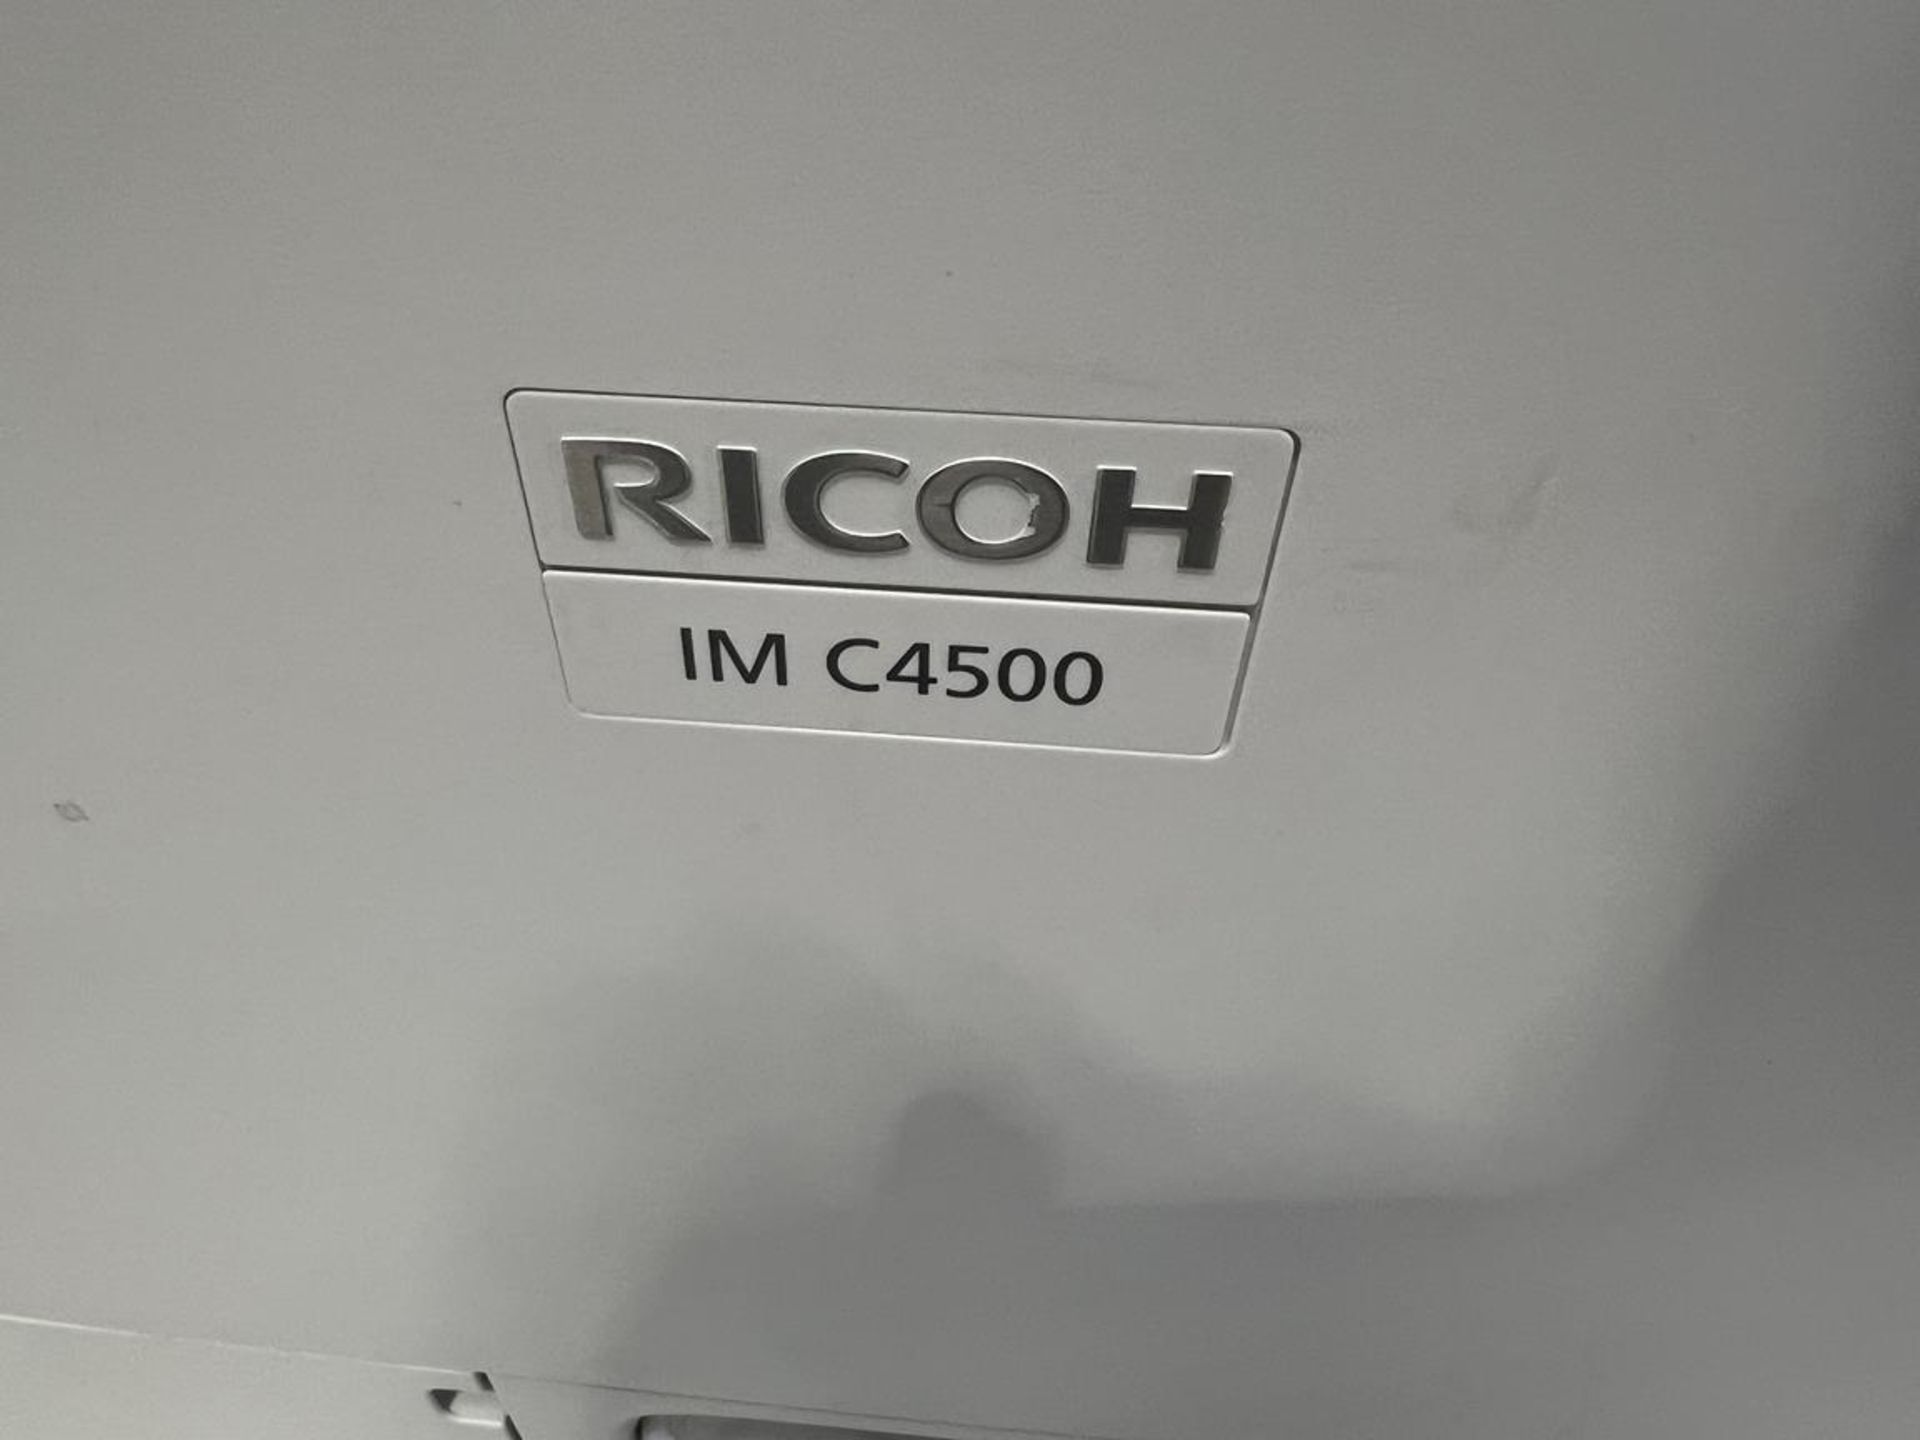 Rioch IM C4500 printer photocopier - Image 6 of 6